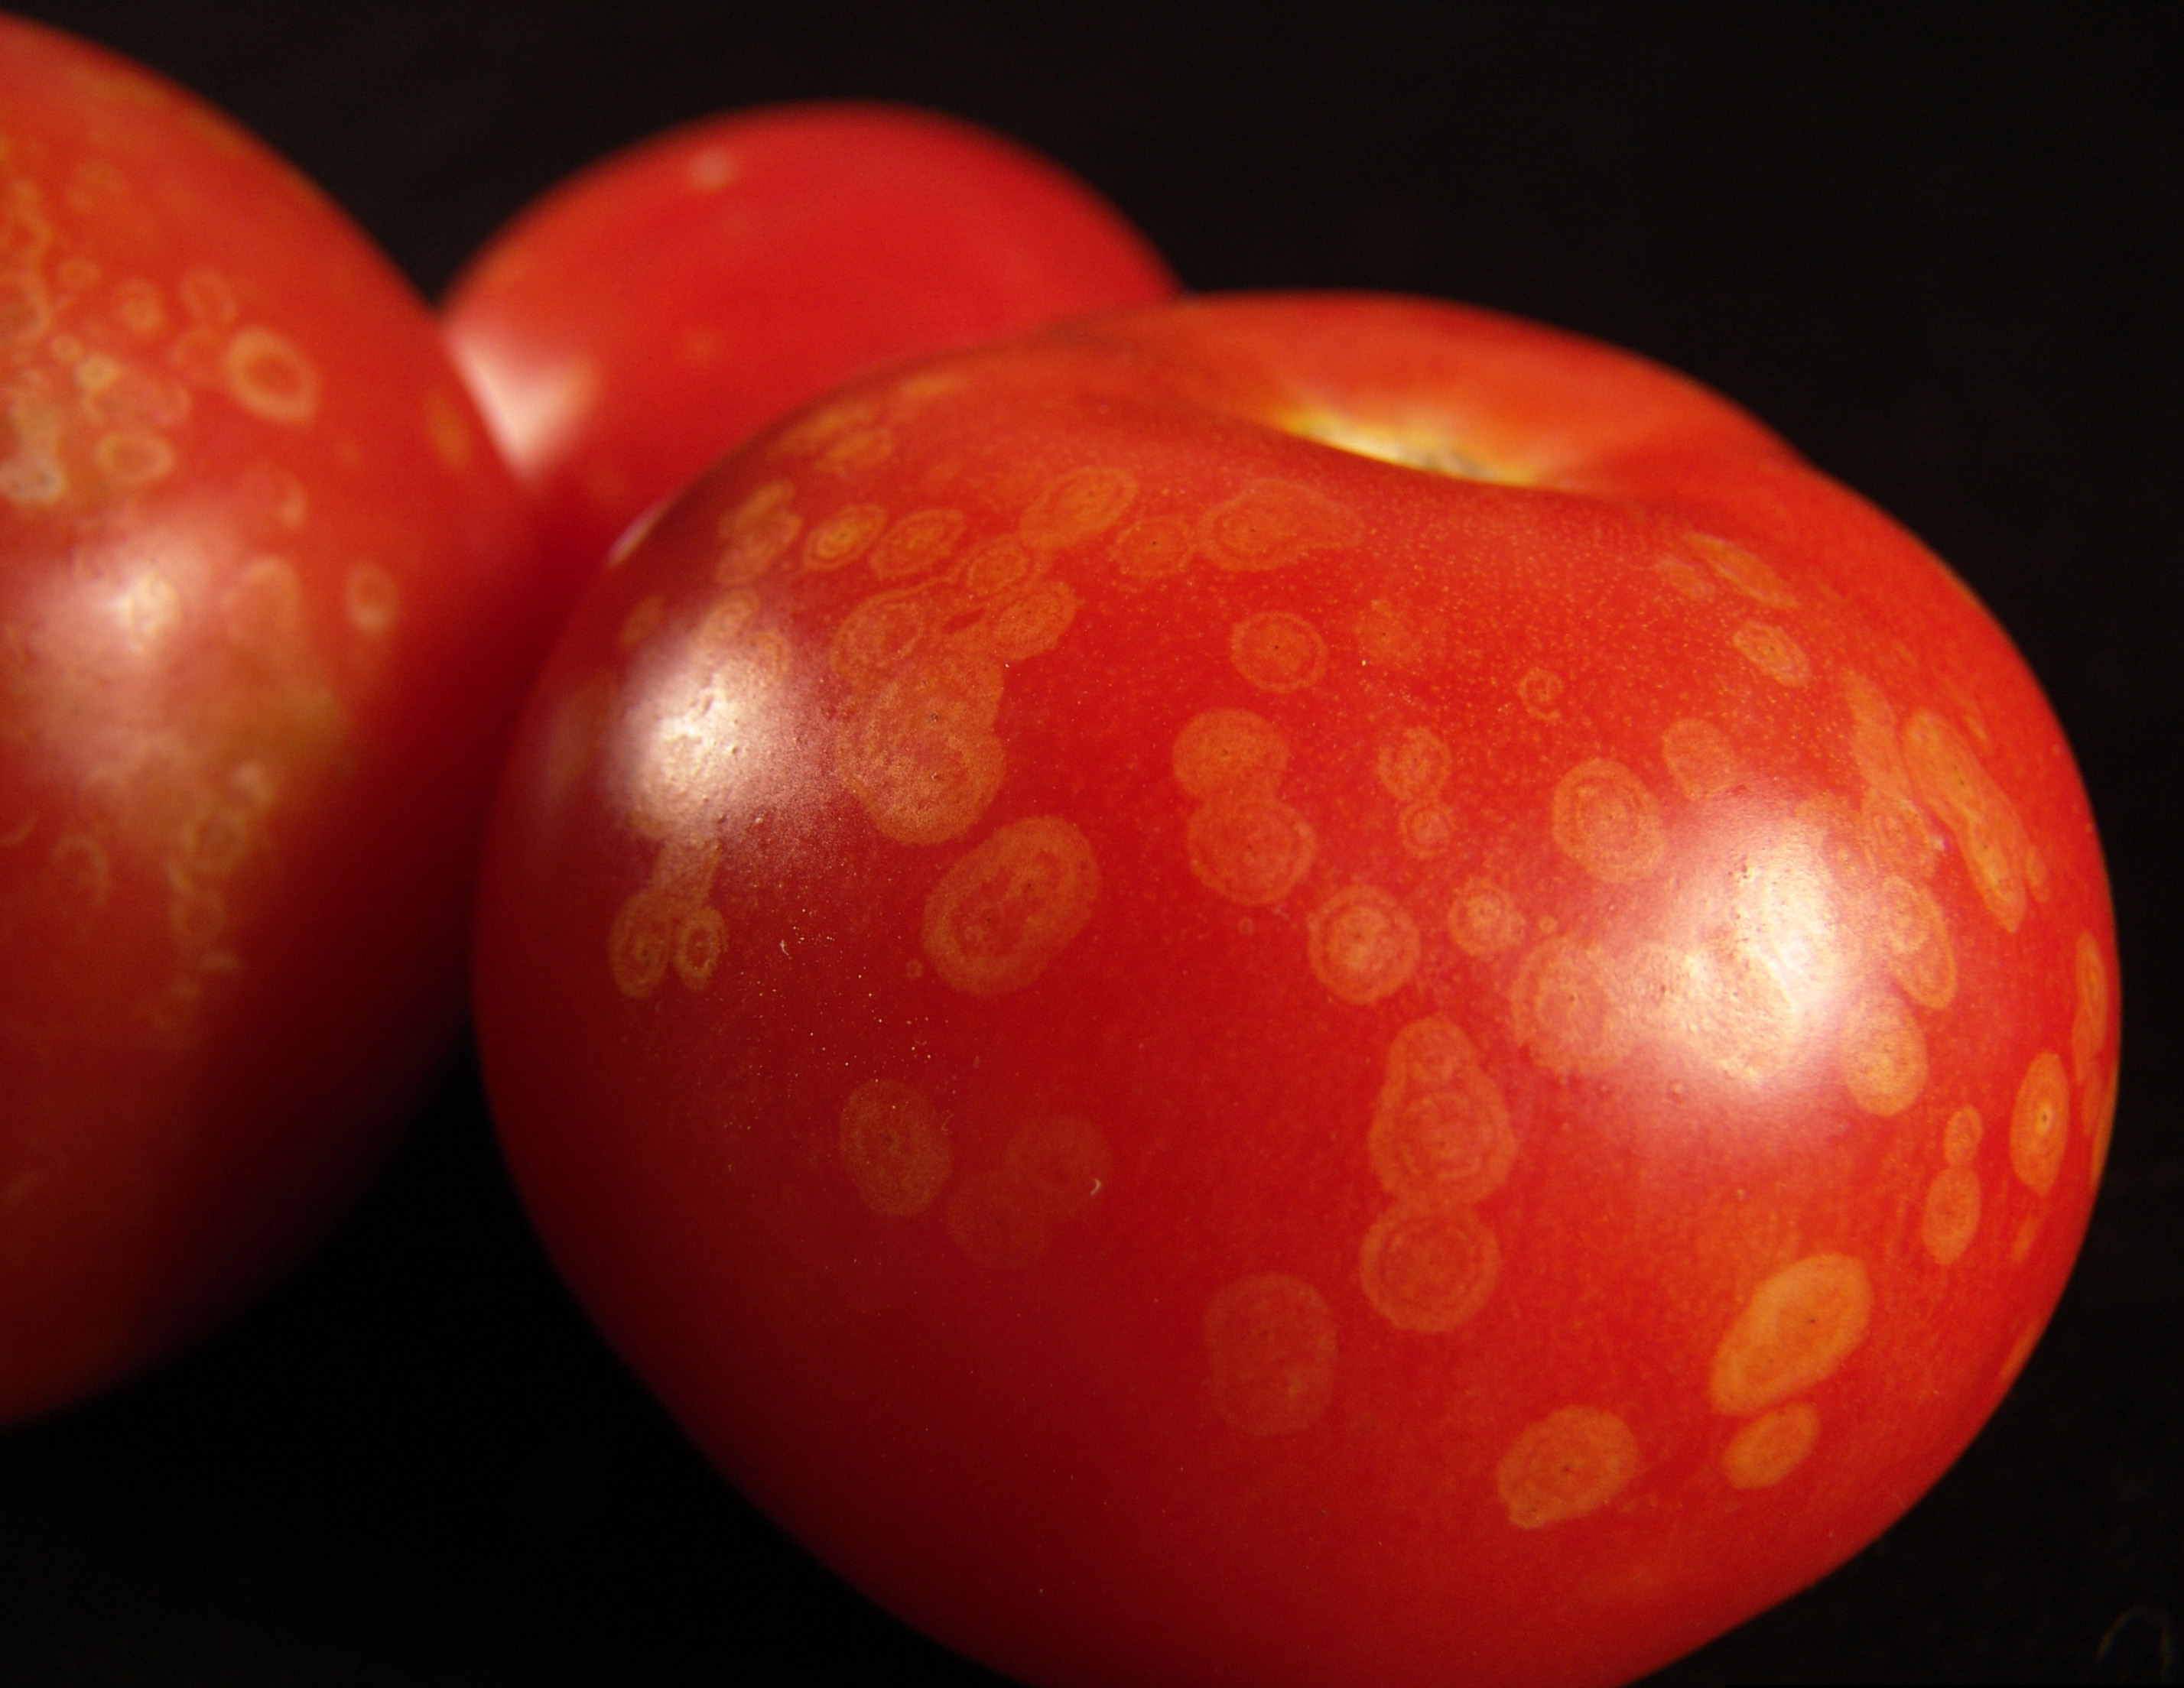 Ghost spot on tomato fruit.